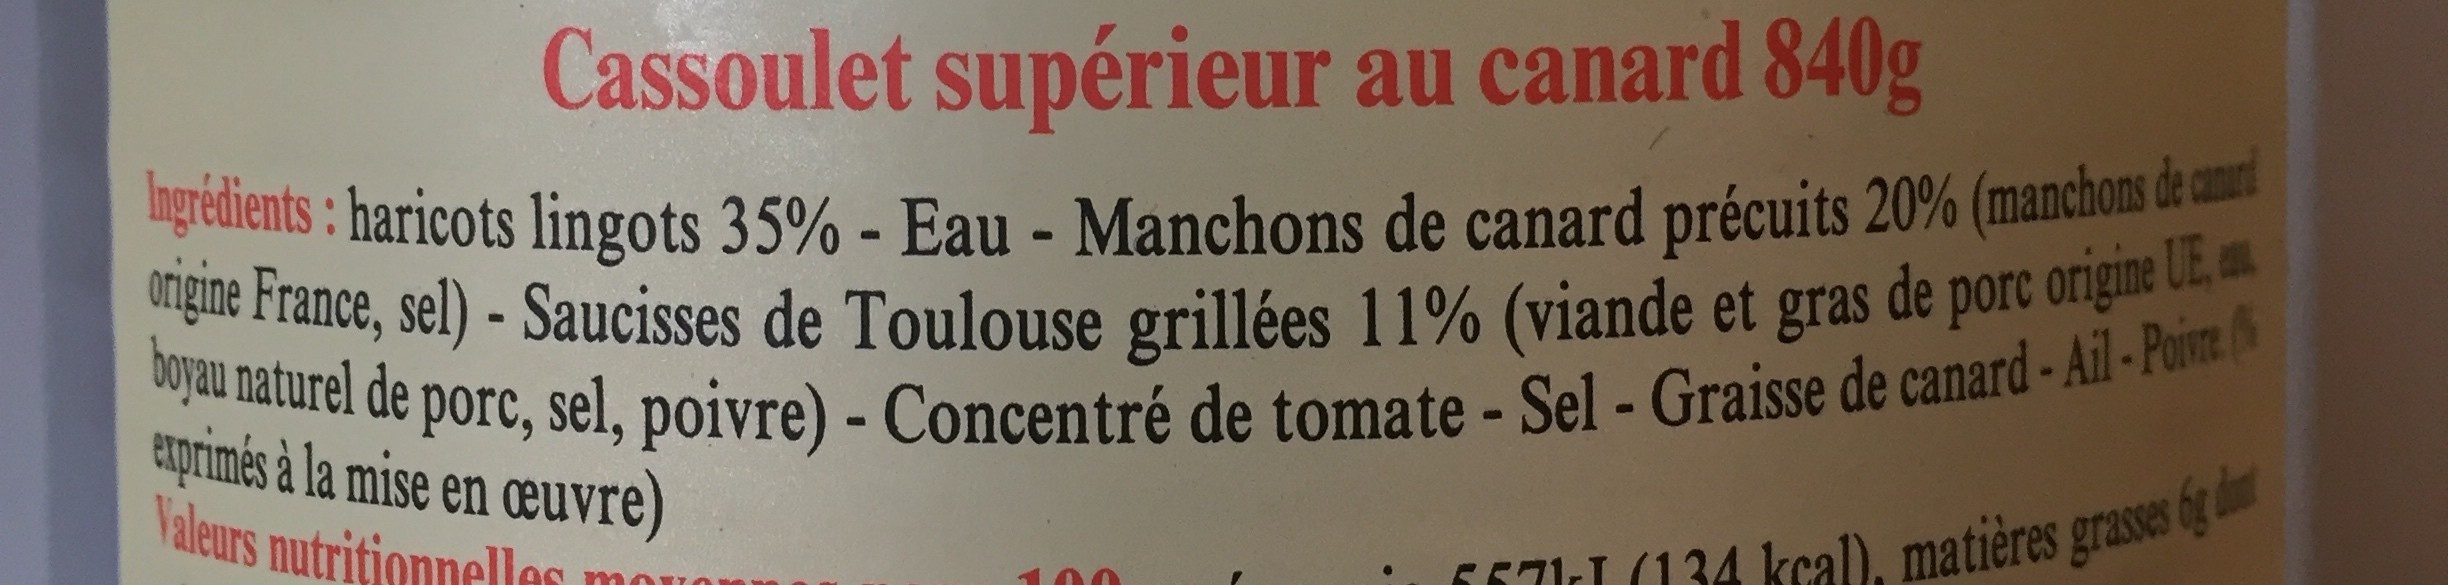 Cassoulet au canard - Ingredients - fr